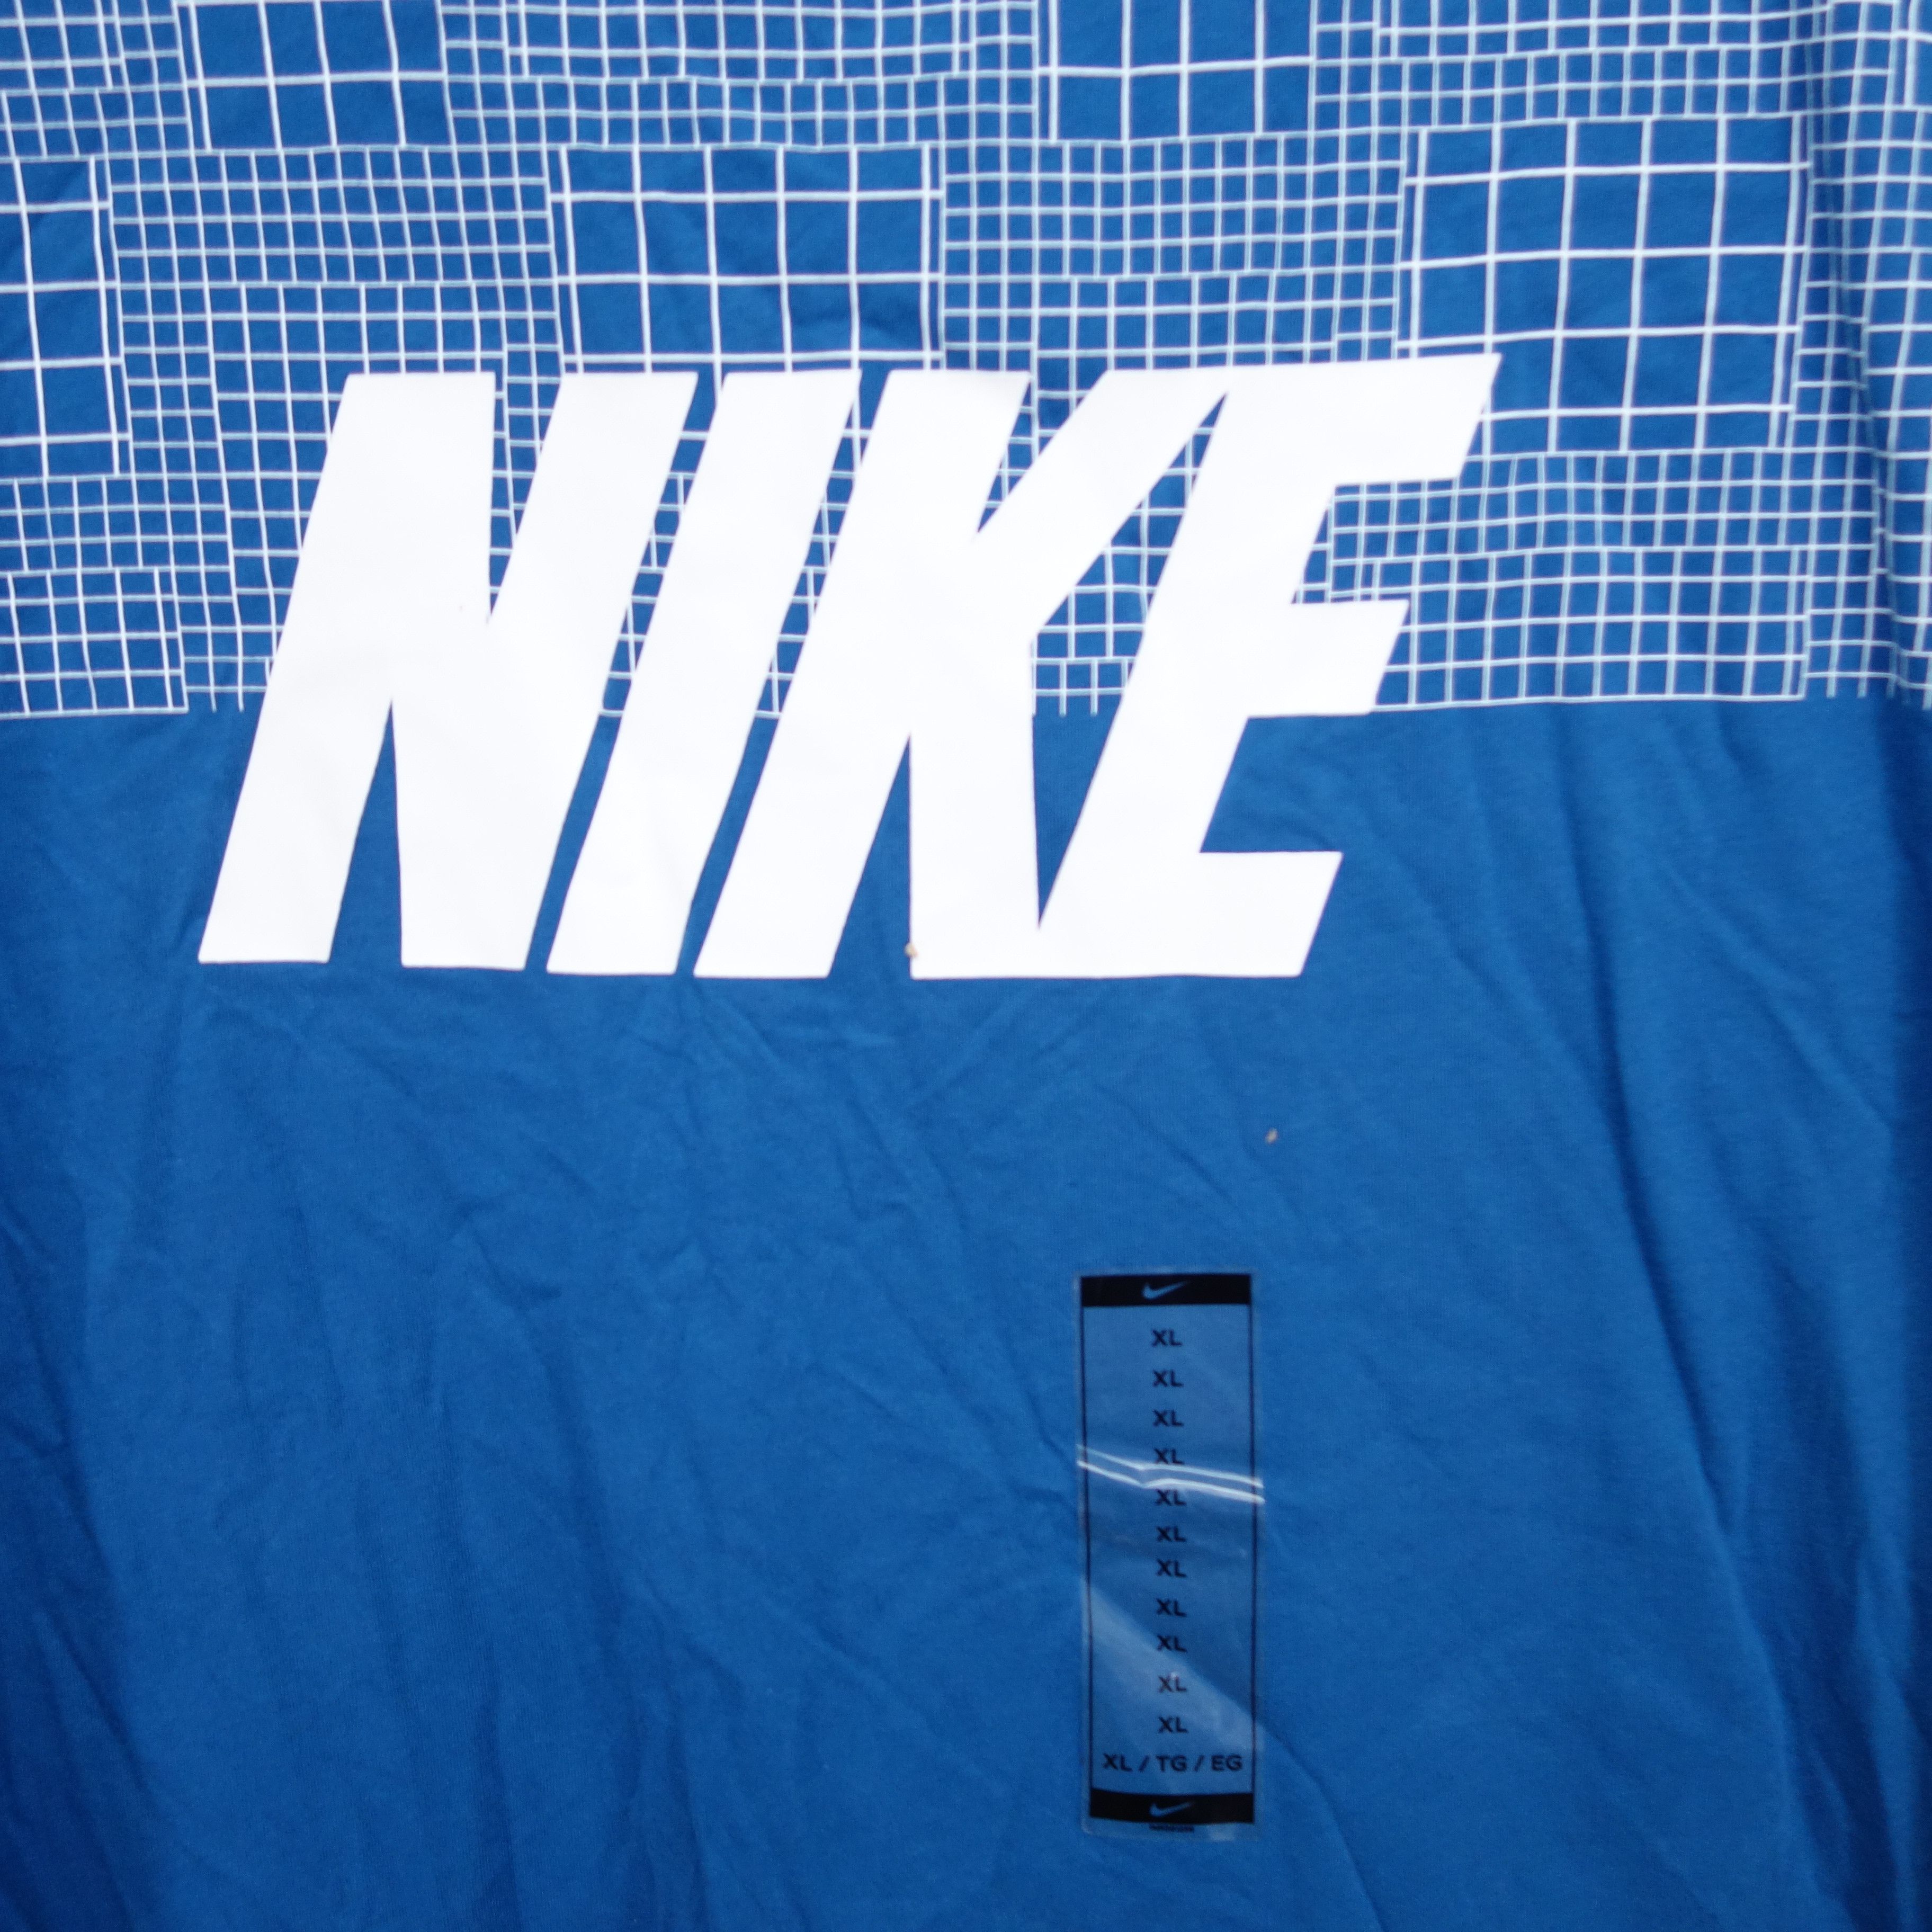 Nike Blue Tank Top Air Jordan Sleeveless Shirt Size XL Size US XL / EU 56 / 4 - 2 Preview